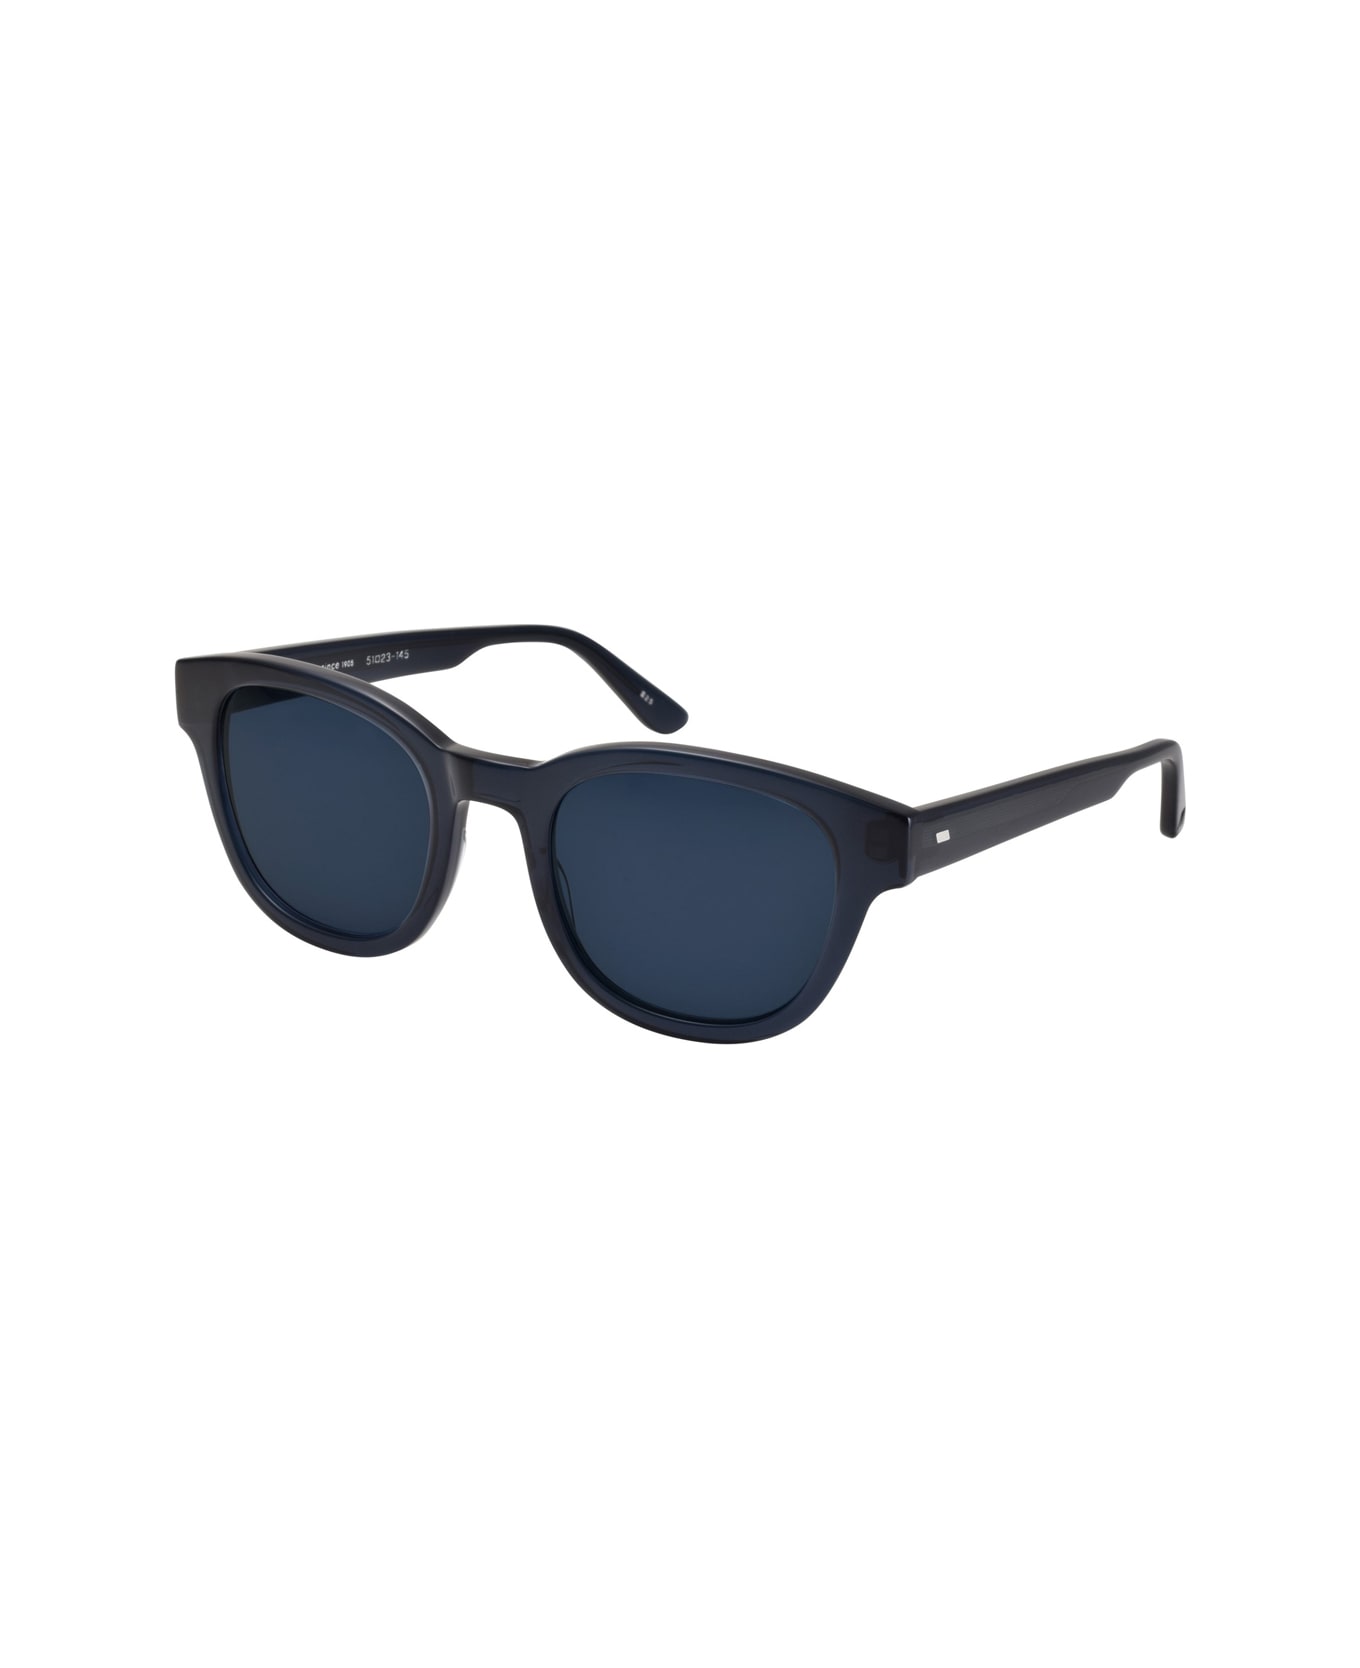 Masunaga Kk 096 S25 Sunglasses - Blu